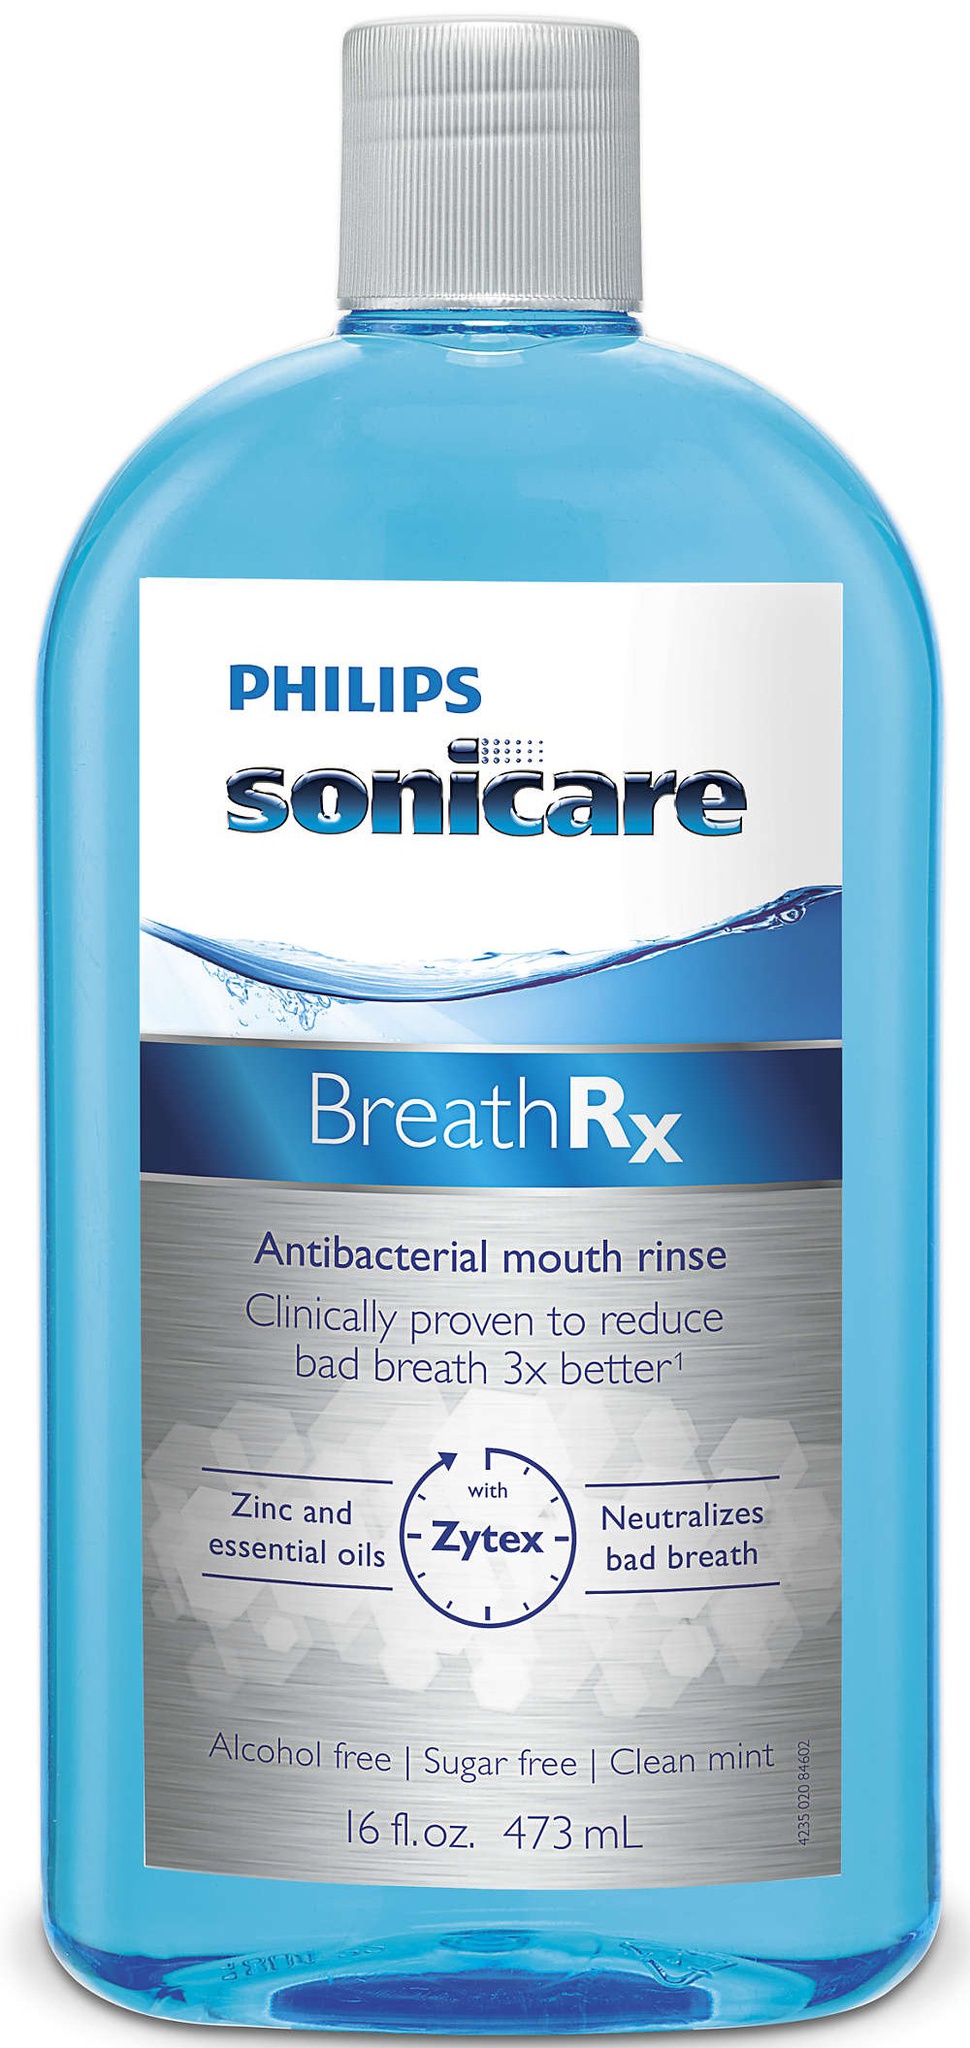 Philips Sonicare Breathrx Mouthwash